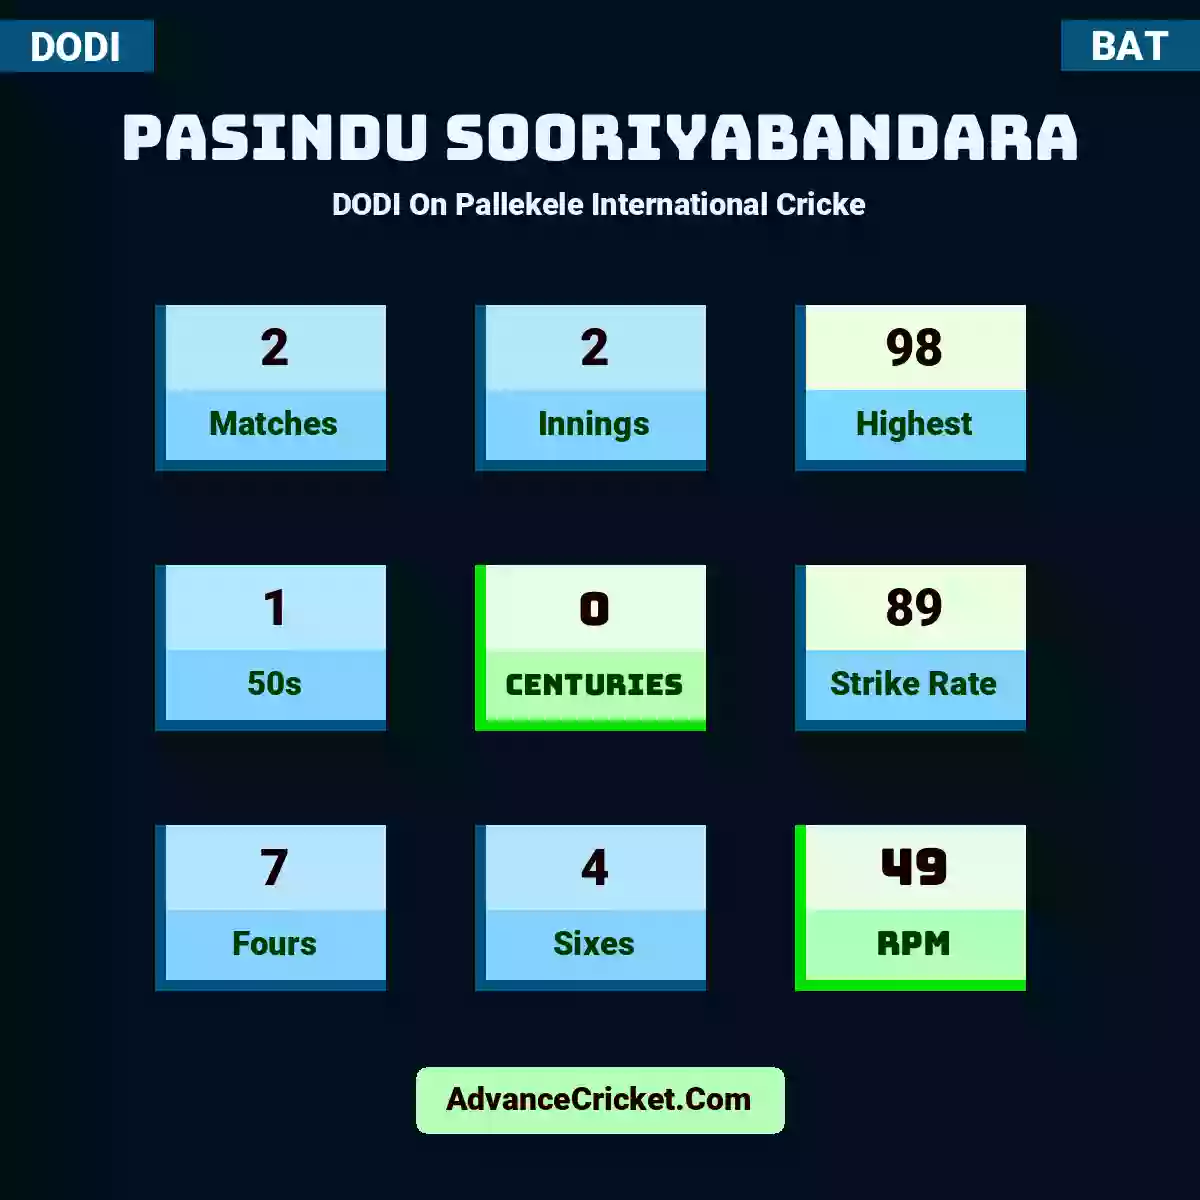 Pasindu Sooriyabandara DODI  On Pallekele International Cricke, Pasindu Sooriyabandara played 2 matches, scored 98 runs as highest, 1 half-centuries, and 0 centuries, with a strike rate of 89. P.Sooriyabandara hit 7 fours and 4 sixes, with an RPM of 49.